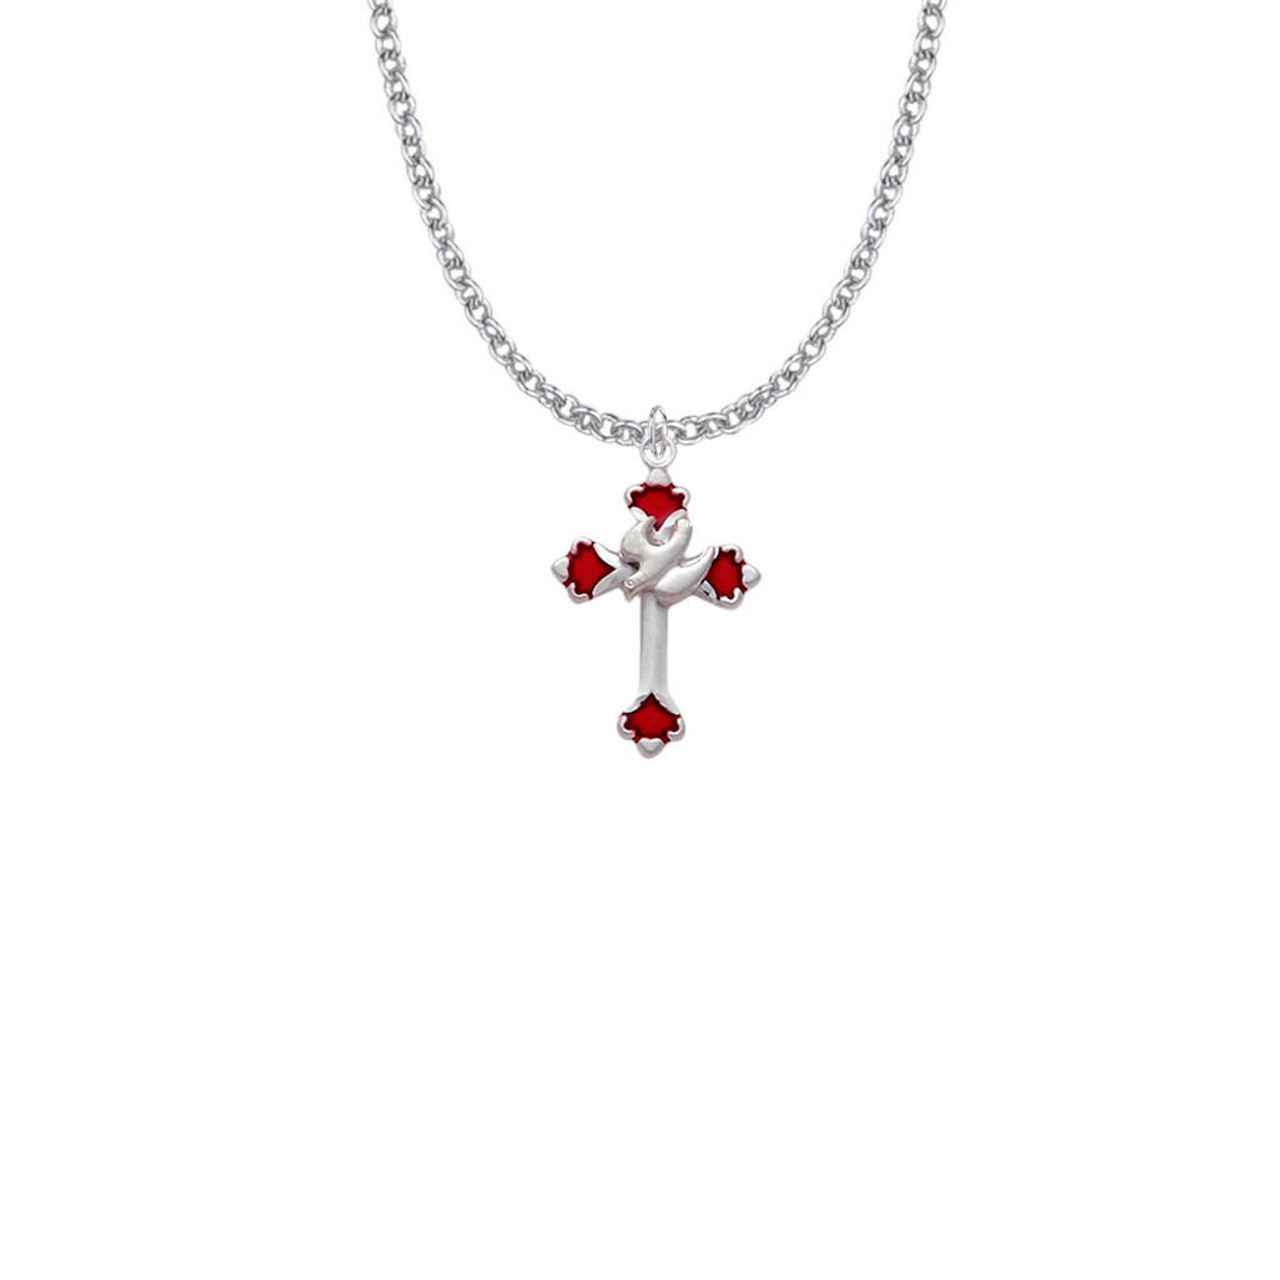 Victoria Mystic Cross Necklace at Rs 249/piece in Delhi | ID: 17309891688